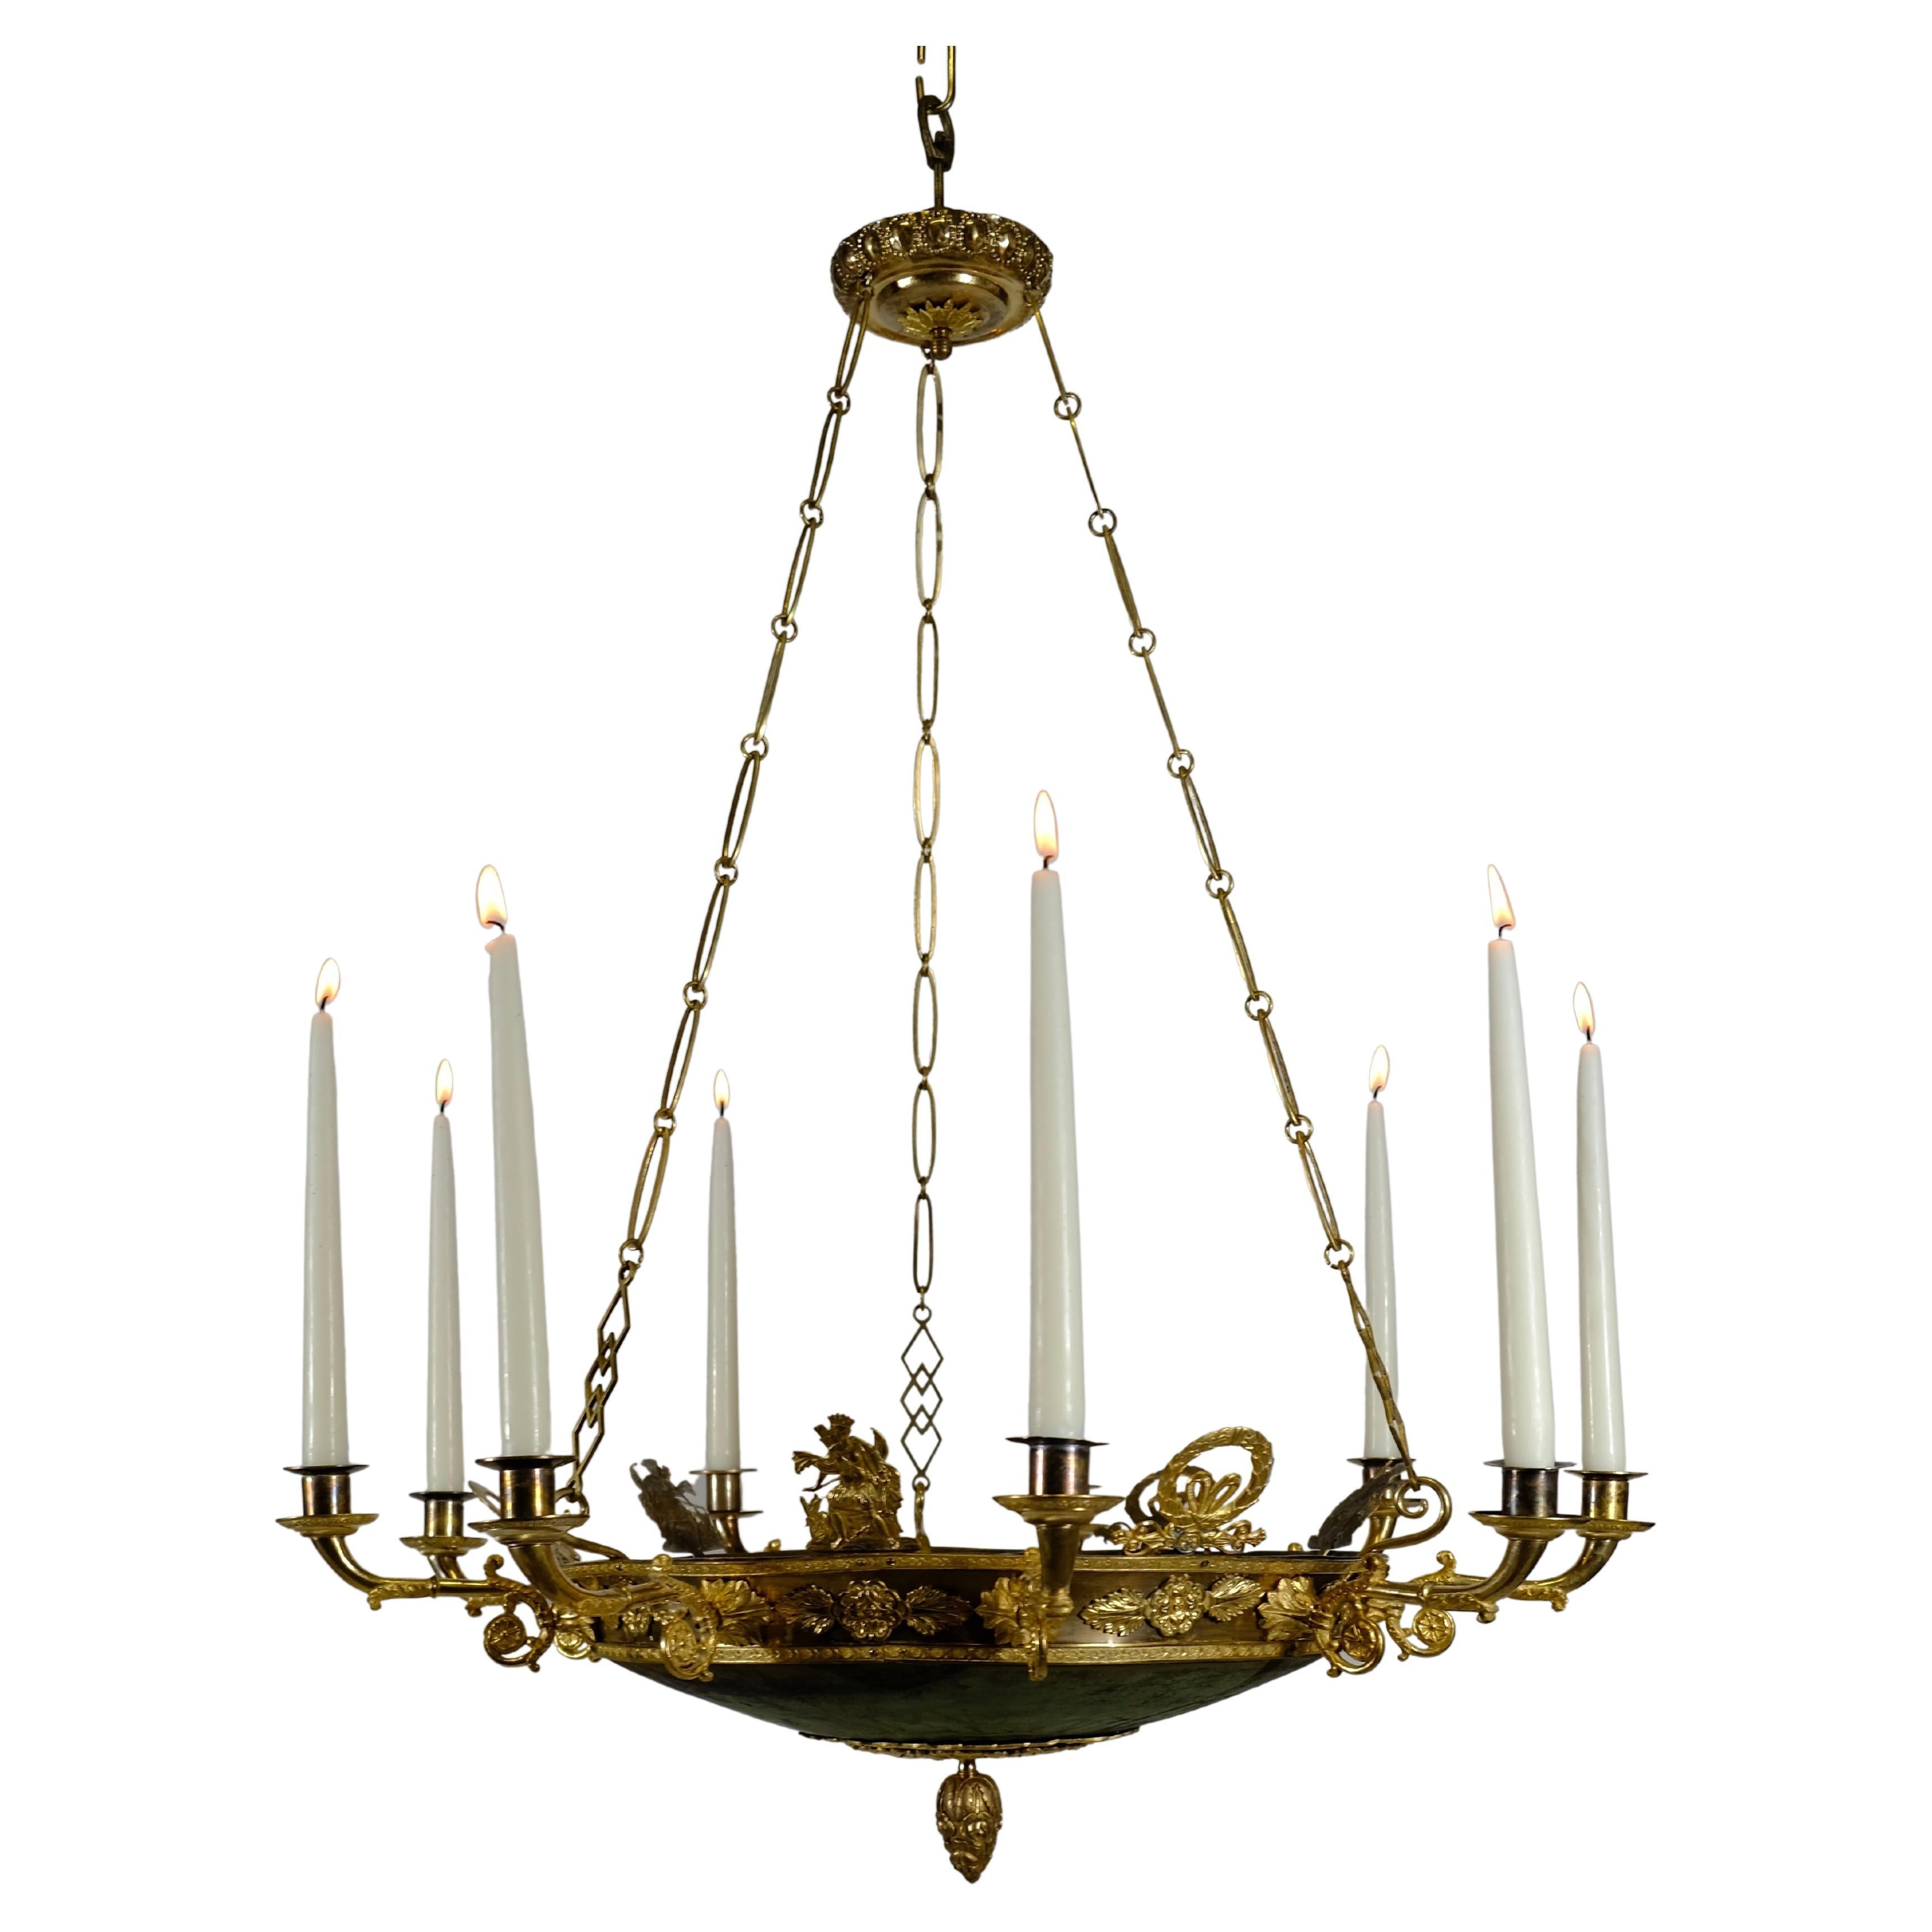 Antique Empire 9 Light Chandelier, Made circa 1820 For Sale